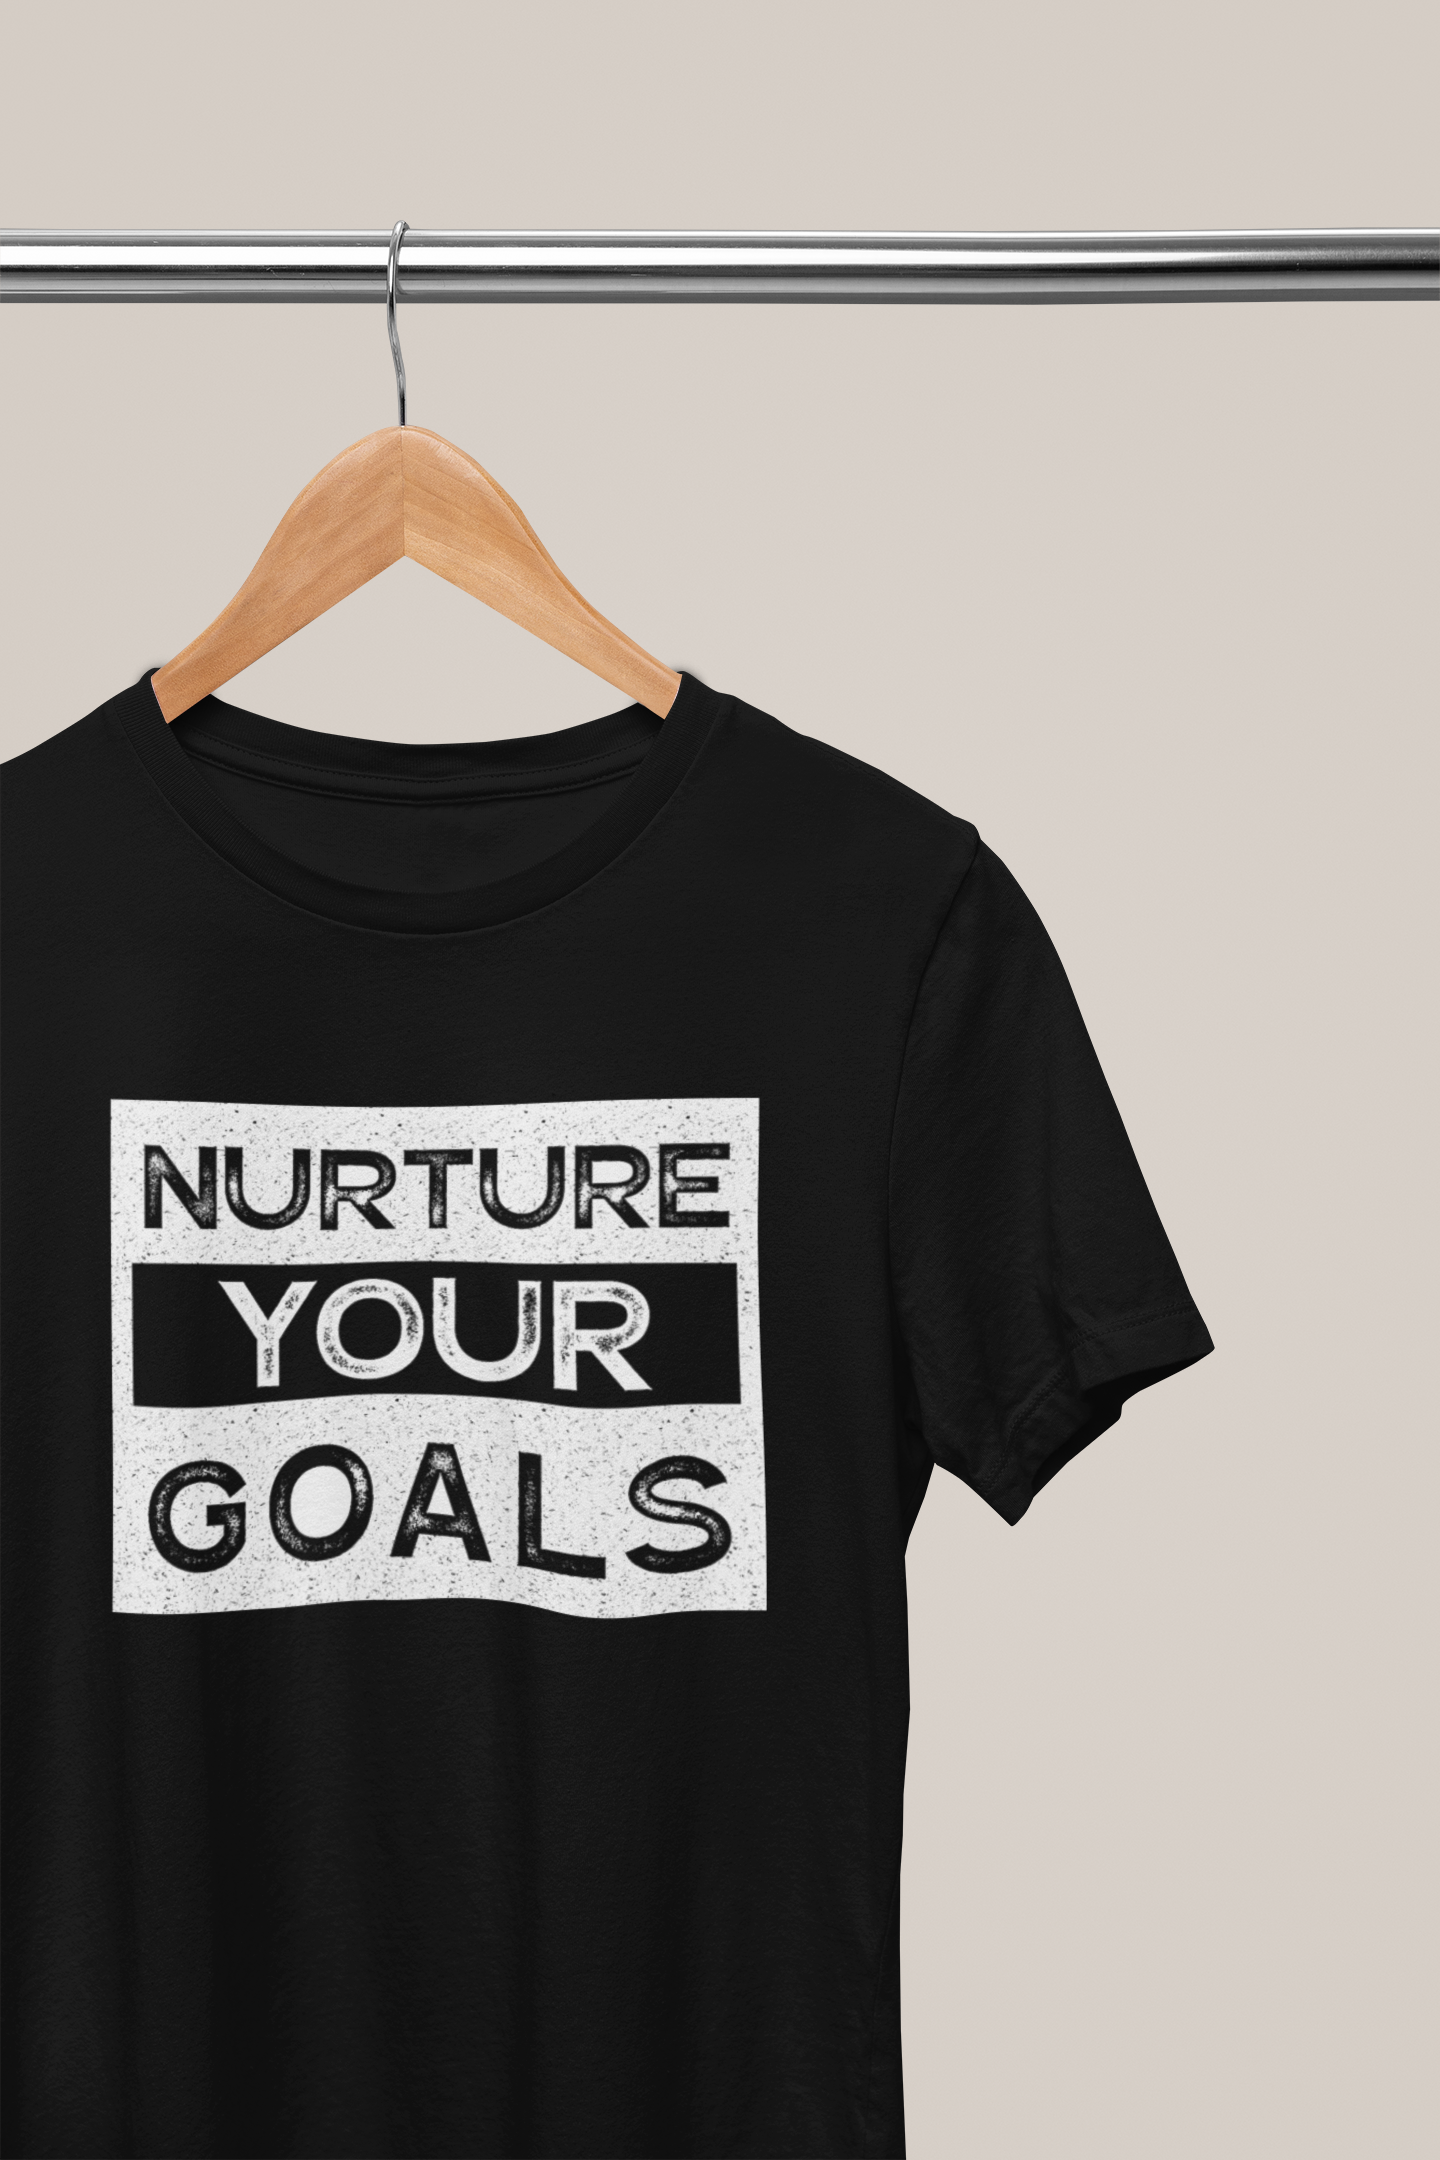 Nurture Your Goals, Hoodies, Sweatshirts, Tees, and Mugs